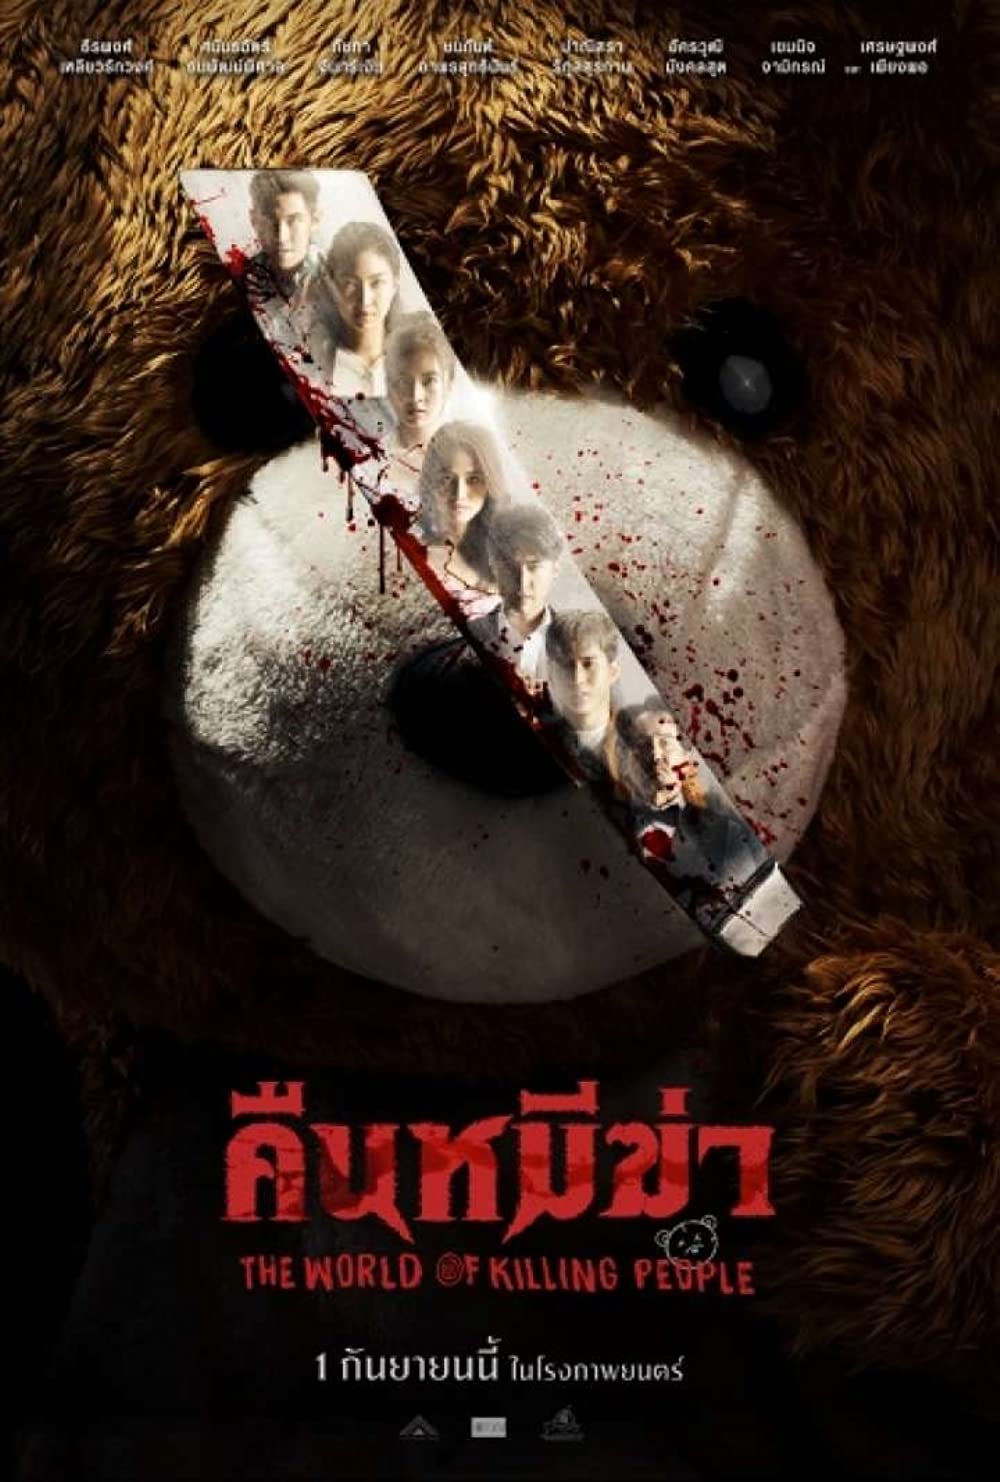 NIGHT OF THE KILLER BEARS (2022) คืนหมีฆ่า พากย์ไทย